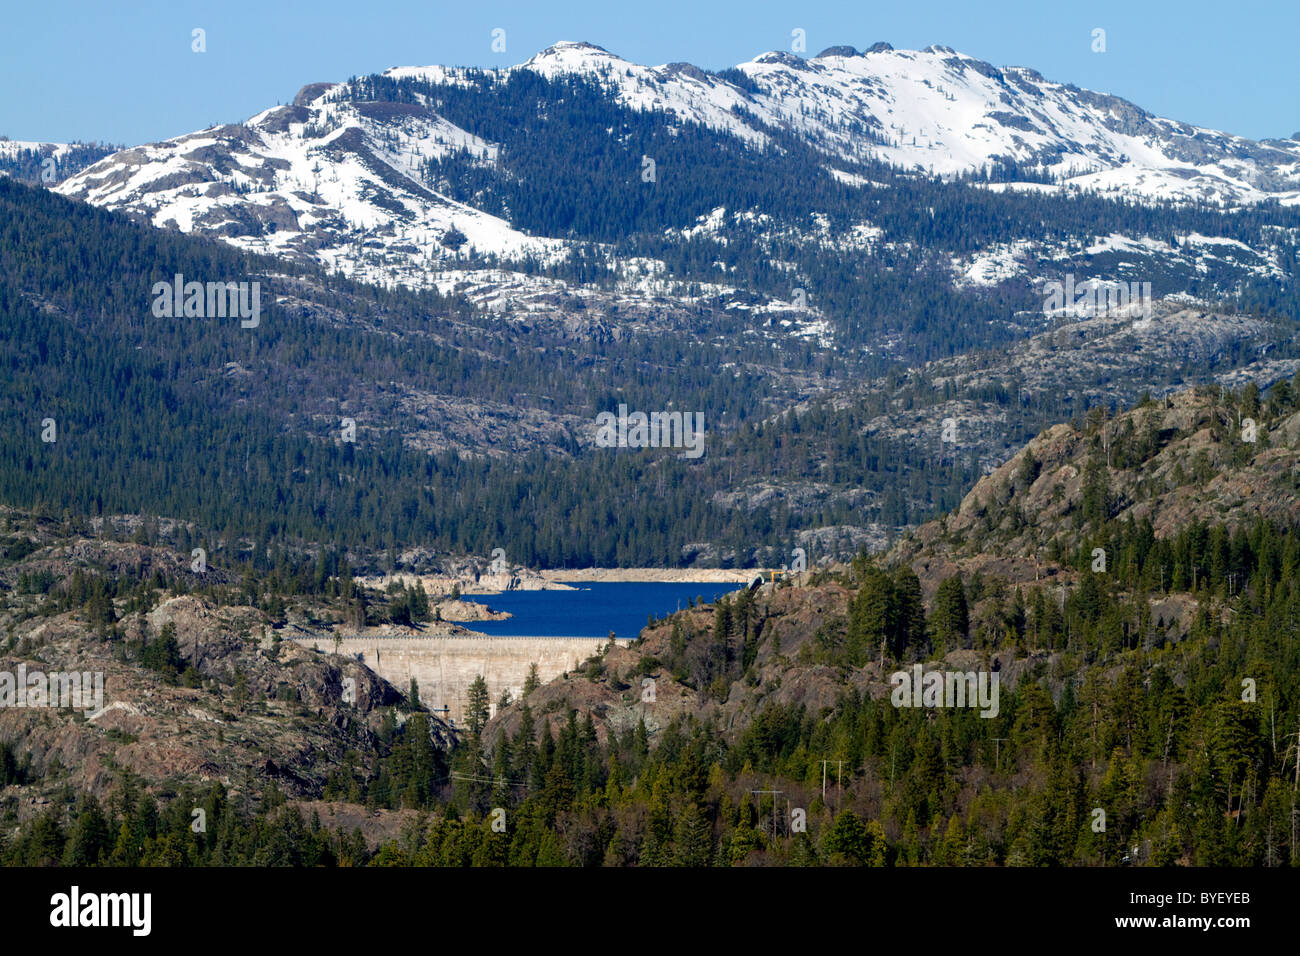 Lake in the Sierra Nevada mountains, California, USA. Stock Photo